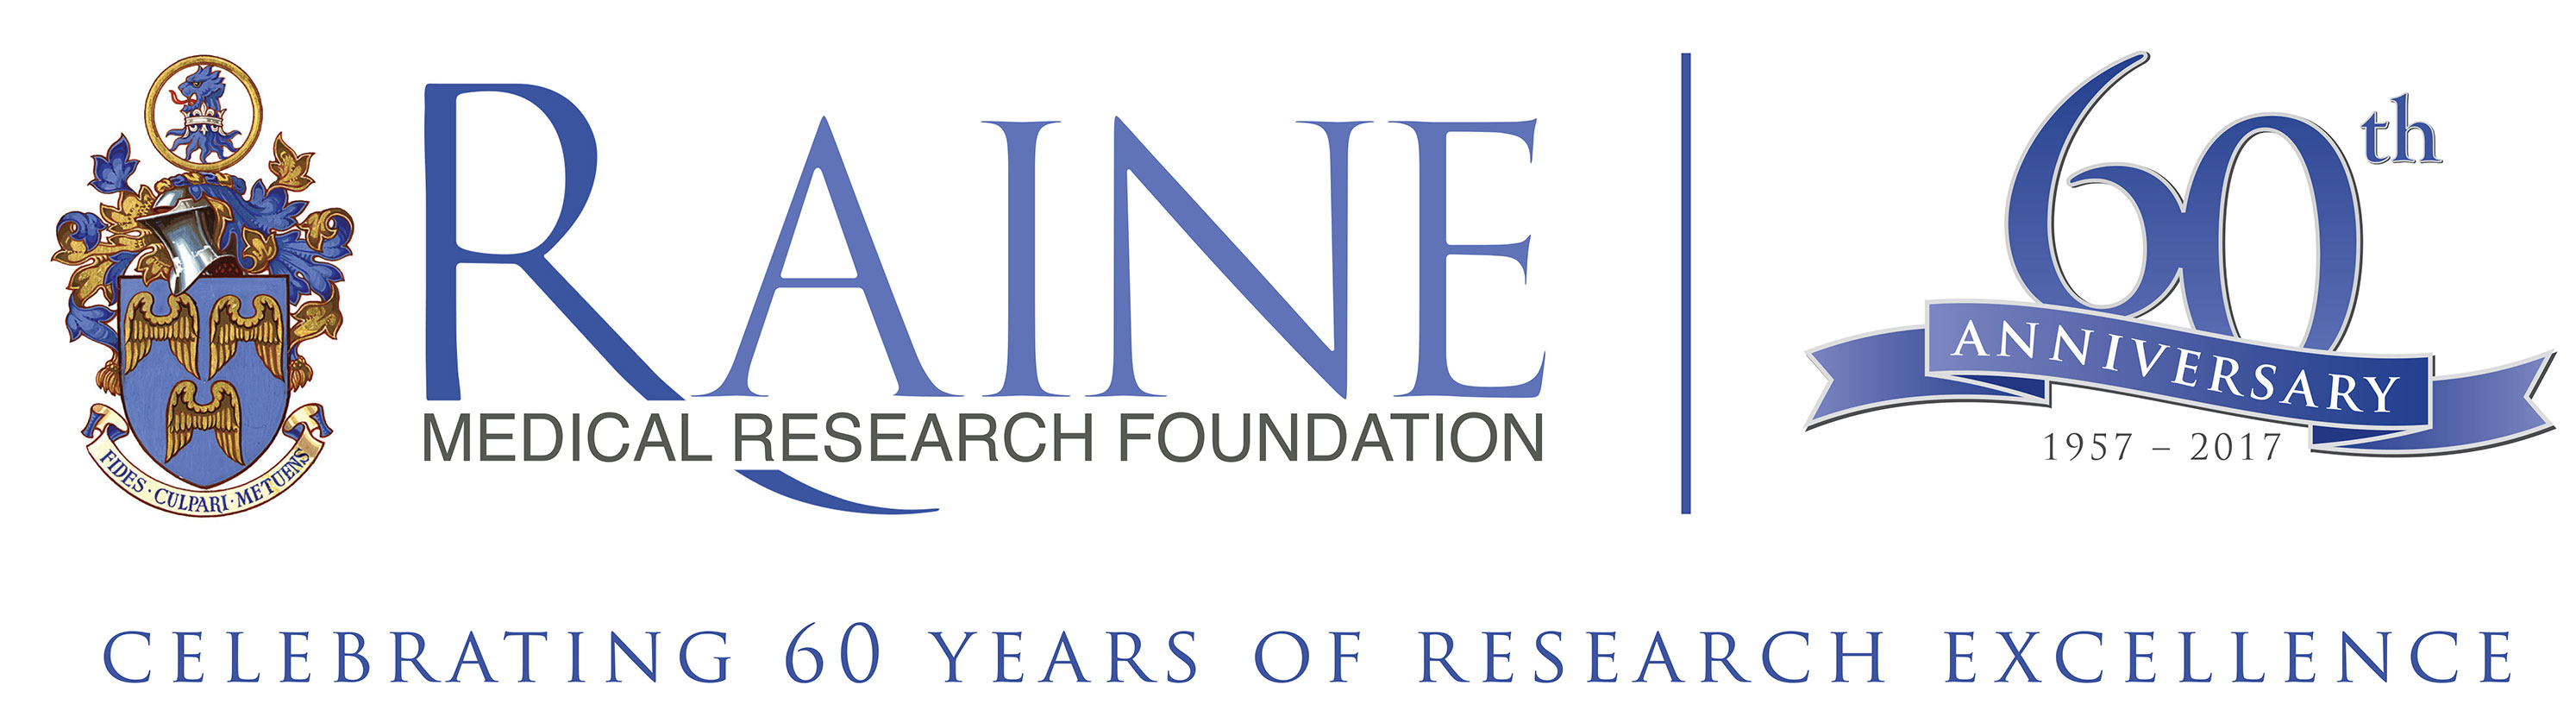 raine-foundation-60th-anniversary-logo